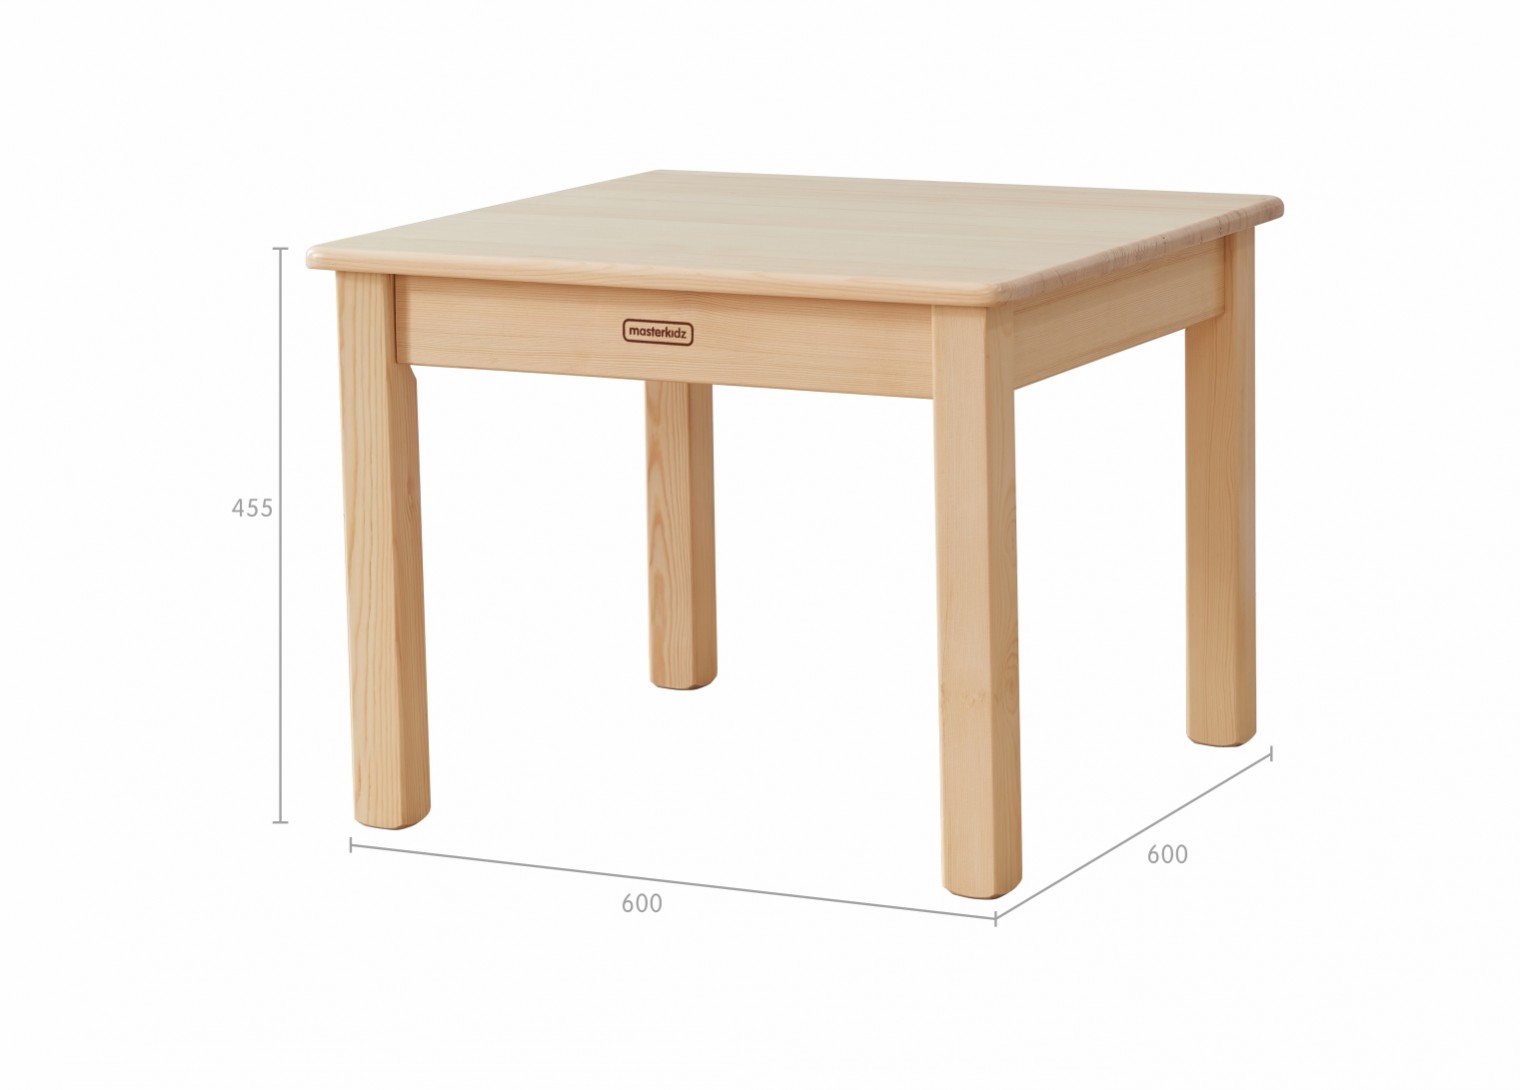 Acar - 455H Square Table